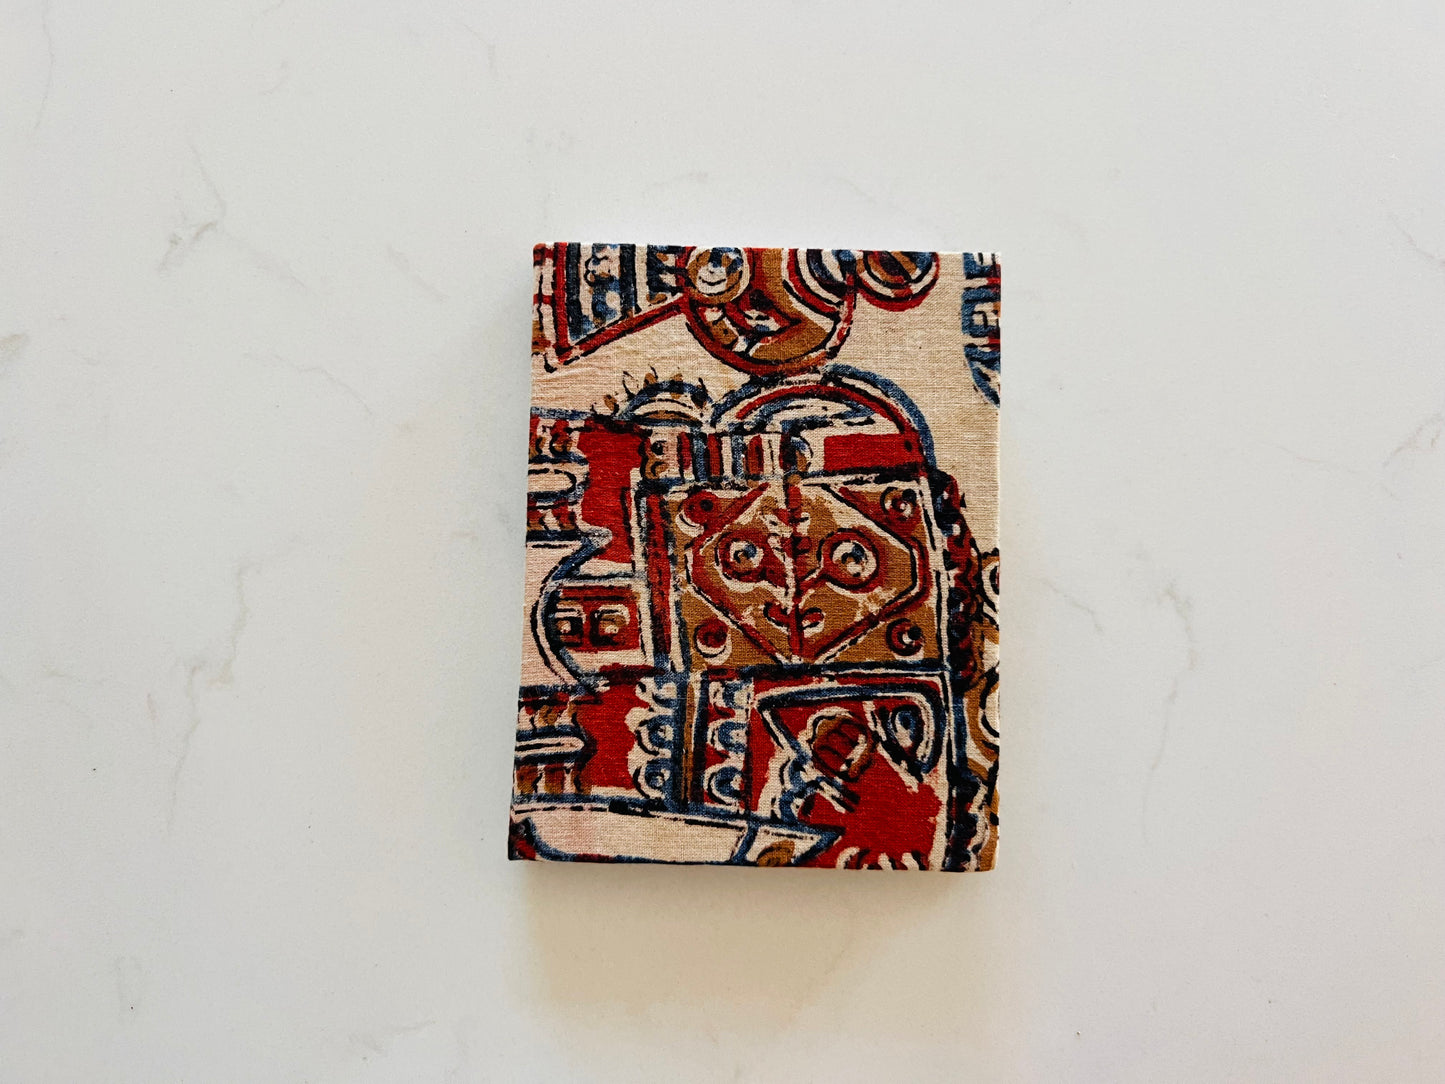 The Sita Handmade Upcycled Journal